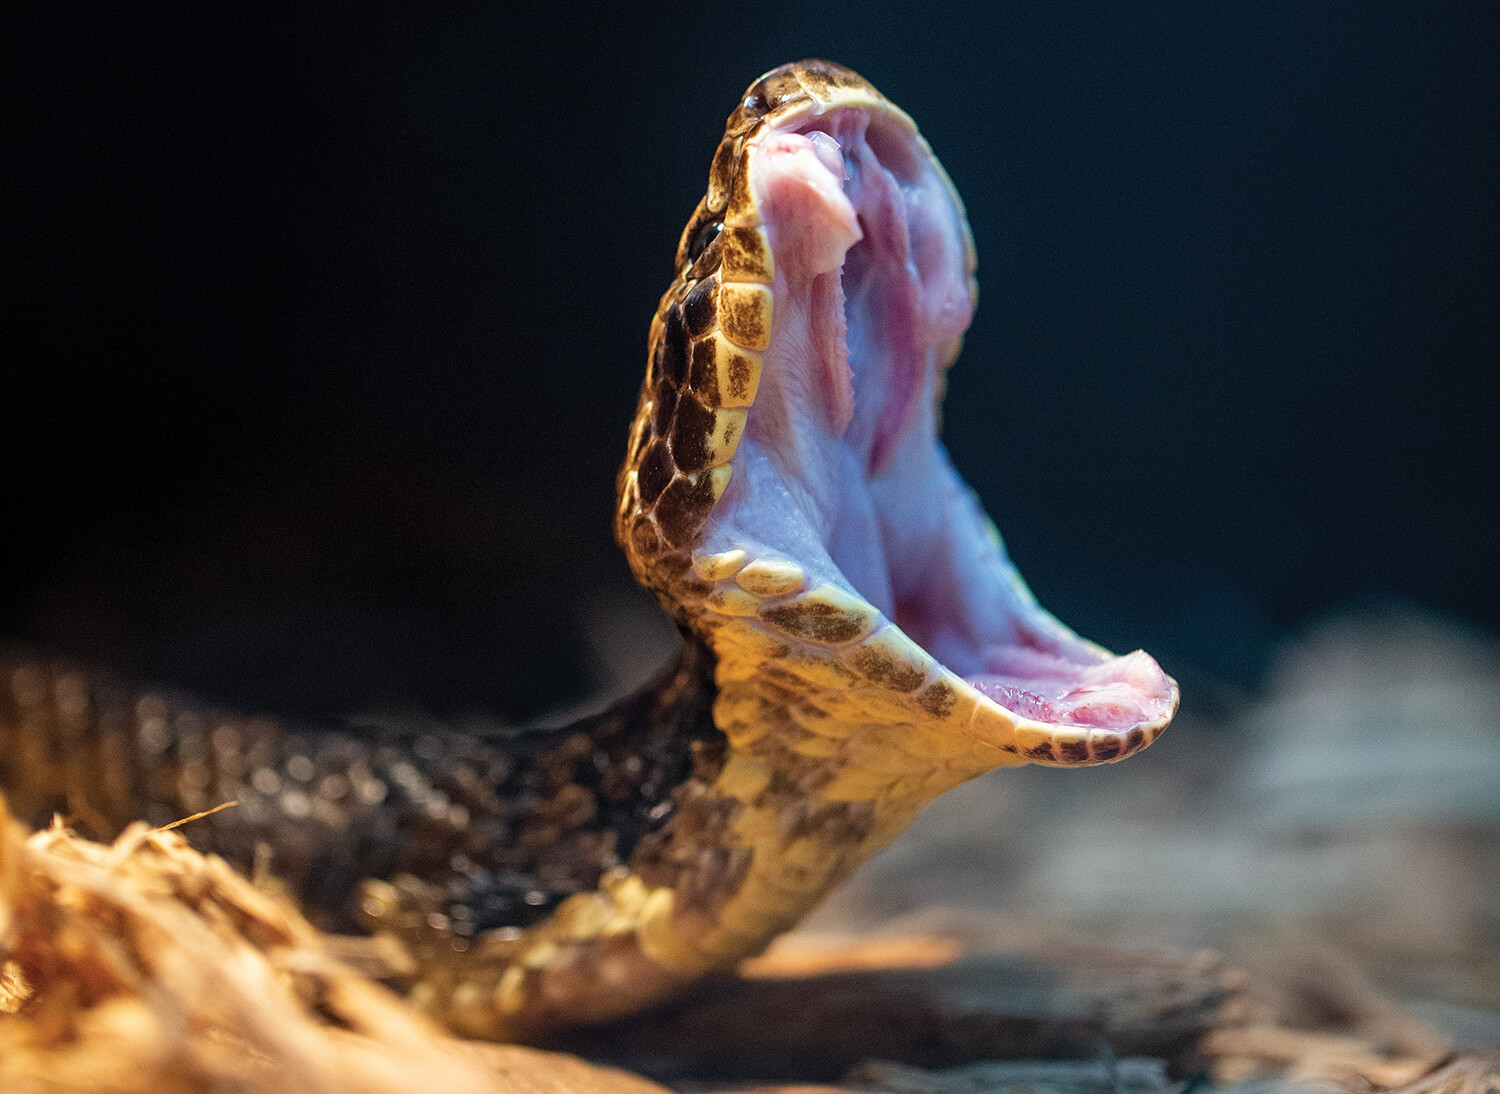 cottonmouth snake bite